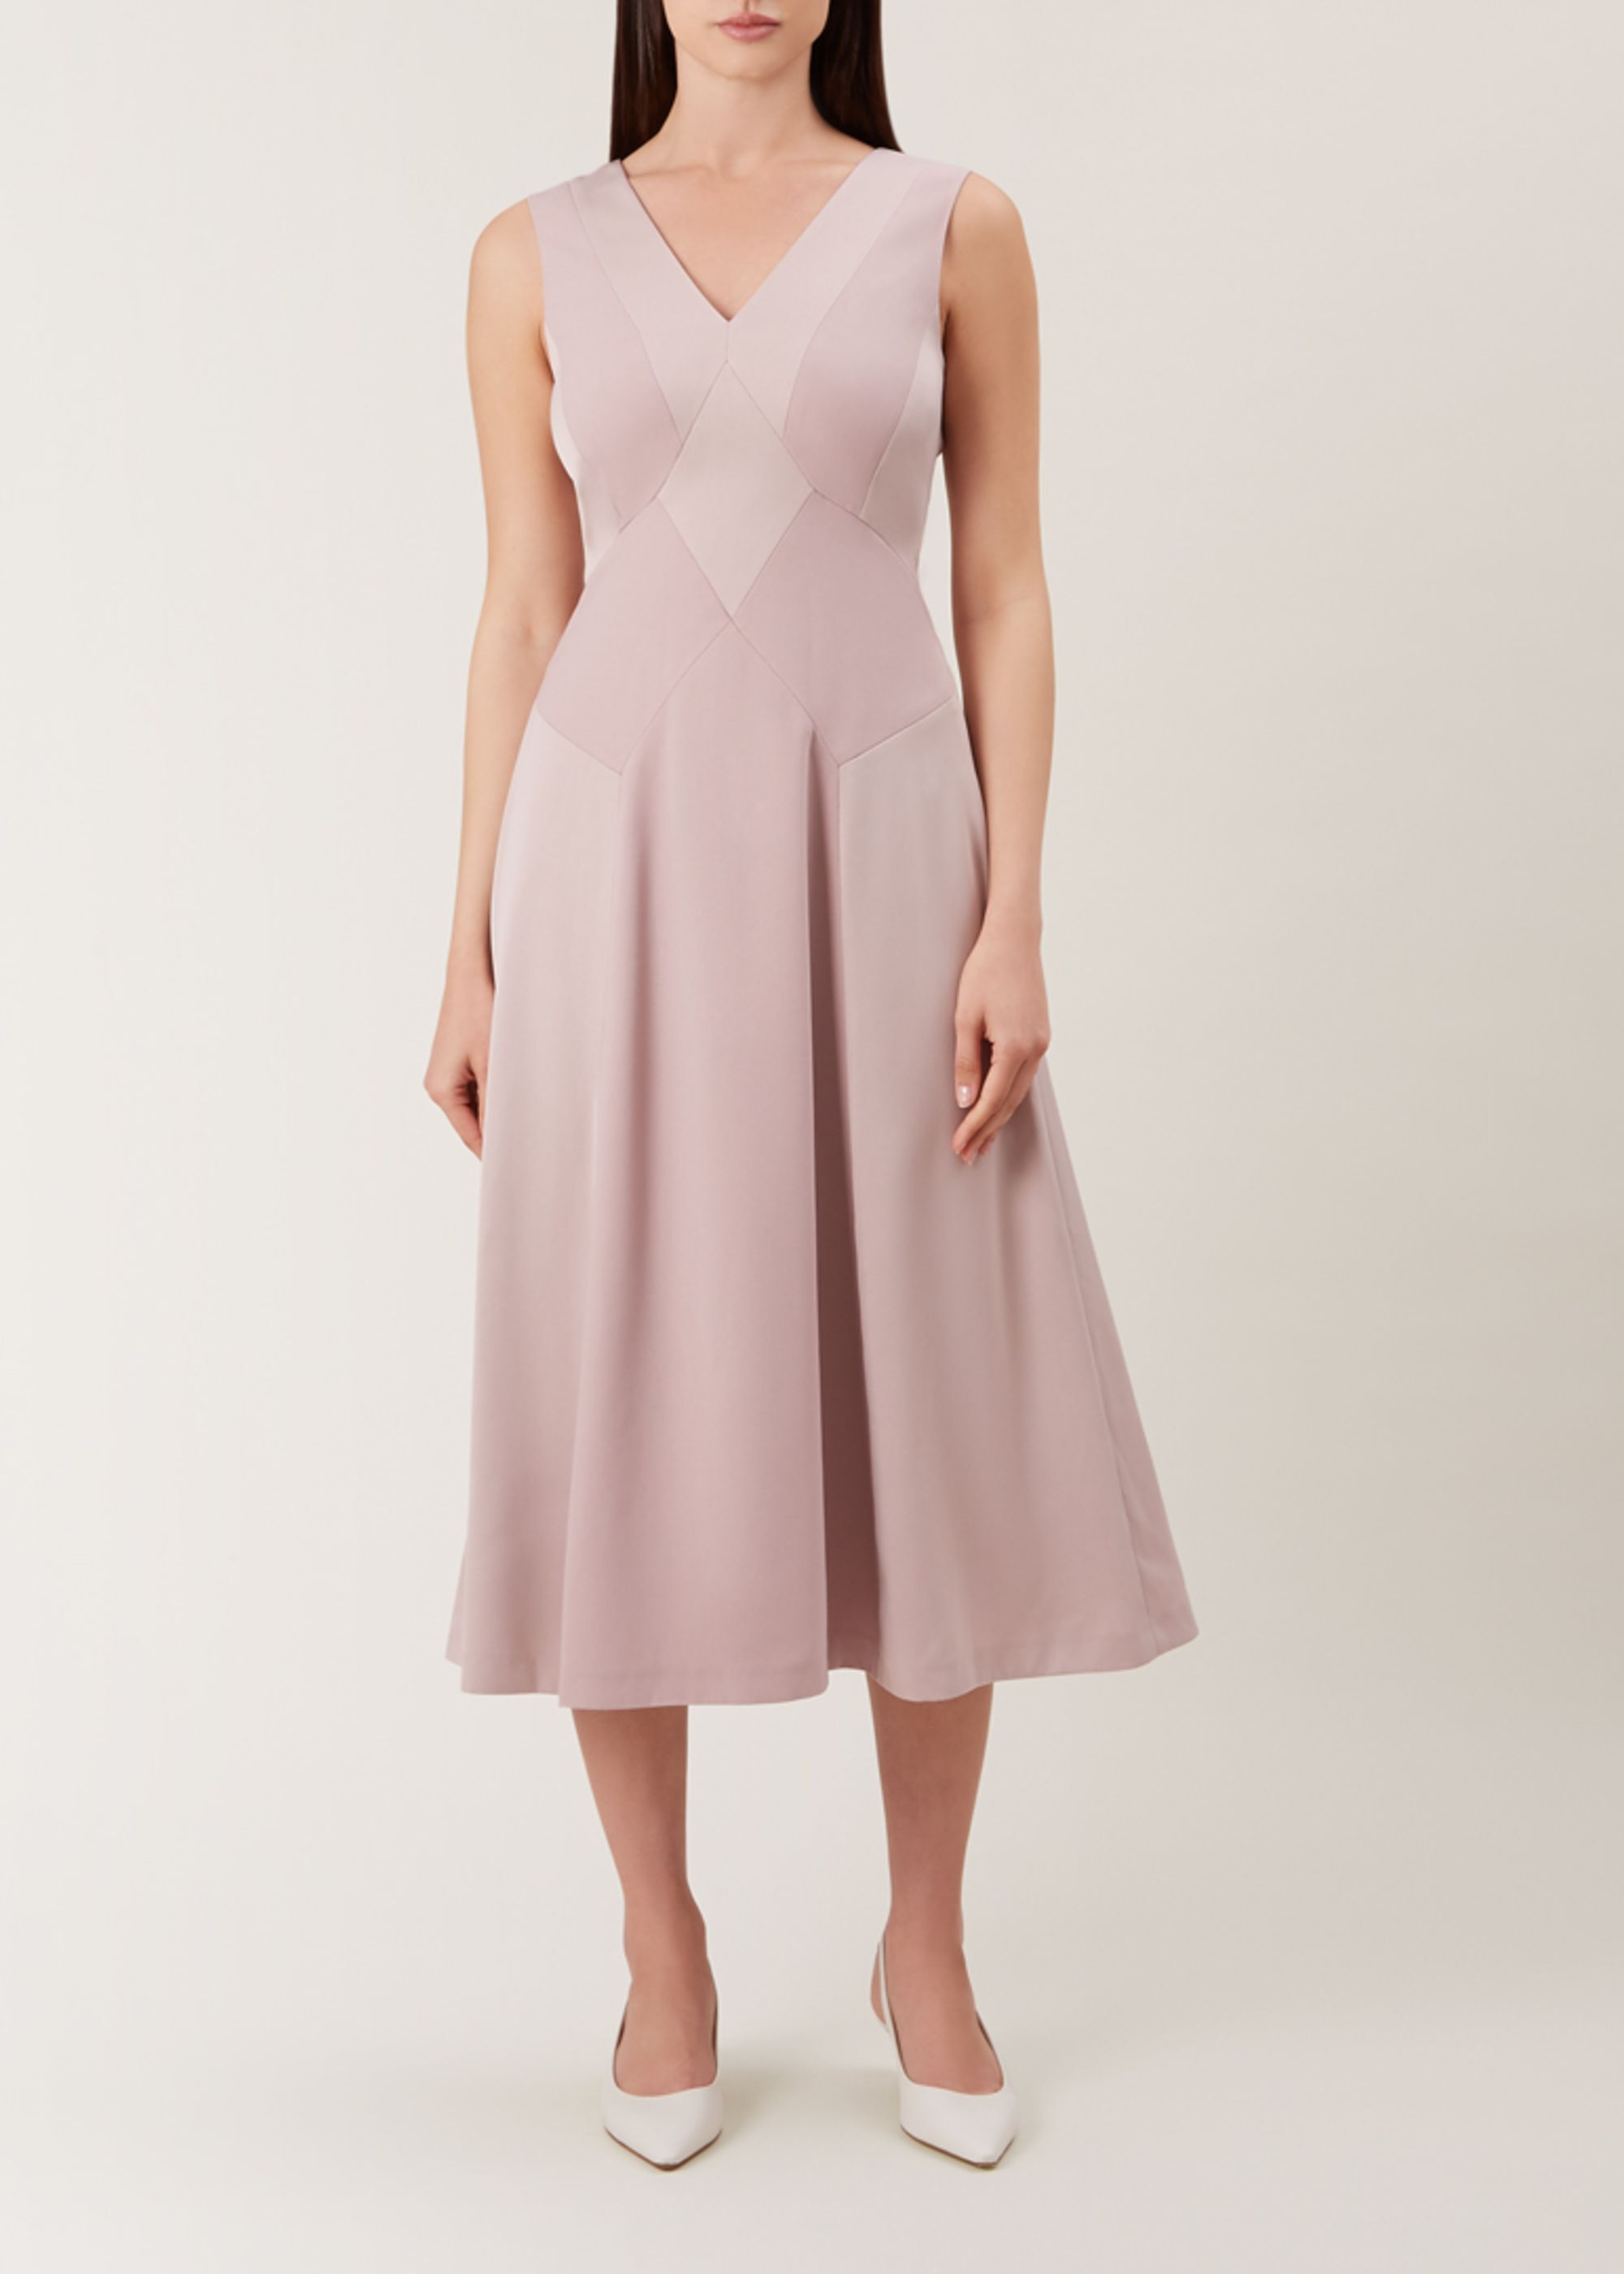 Hobbs Elaine Dress Midi Fit & Flare Sleeveless | eBay